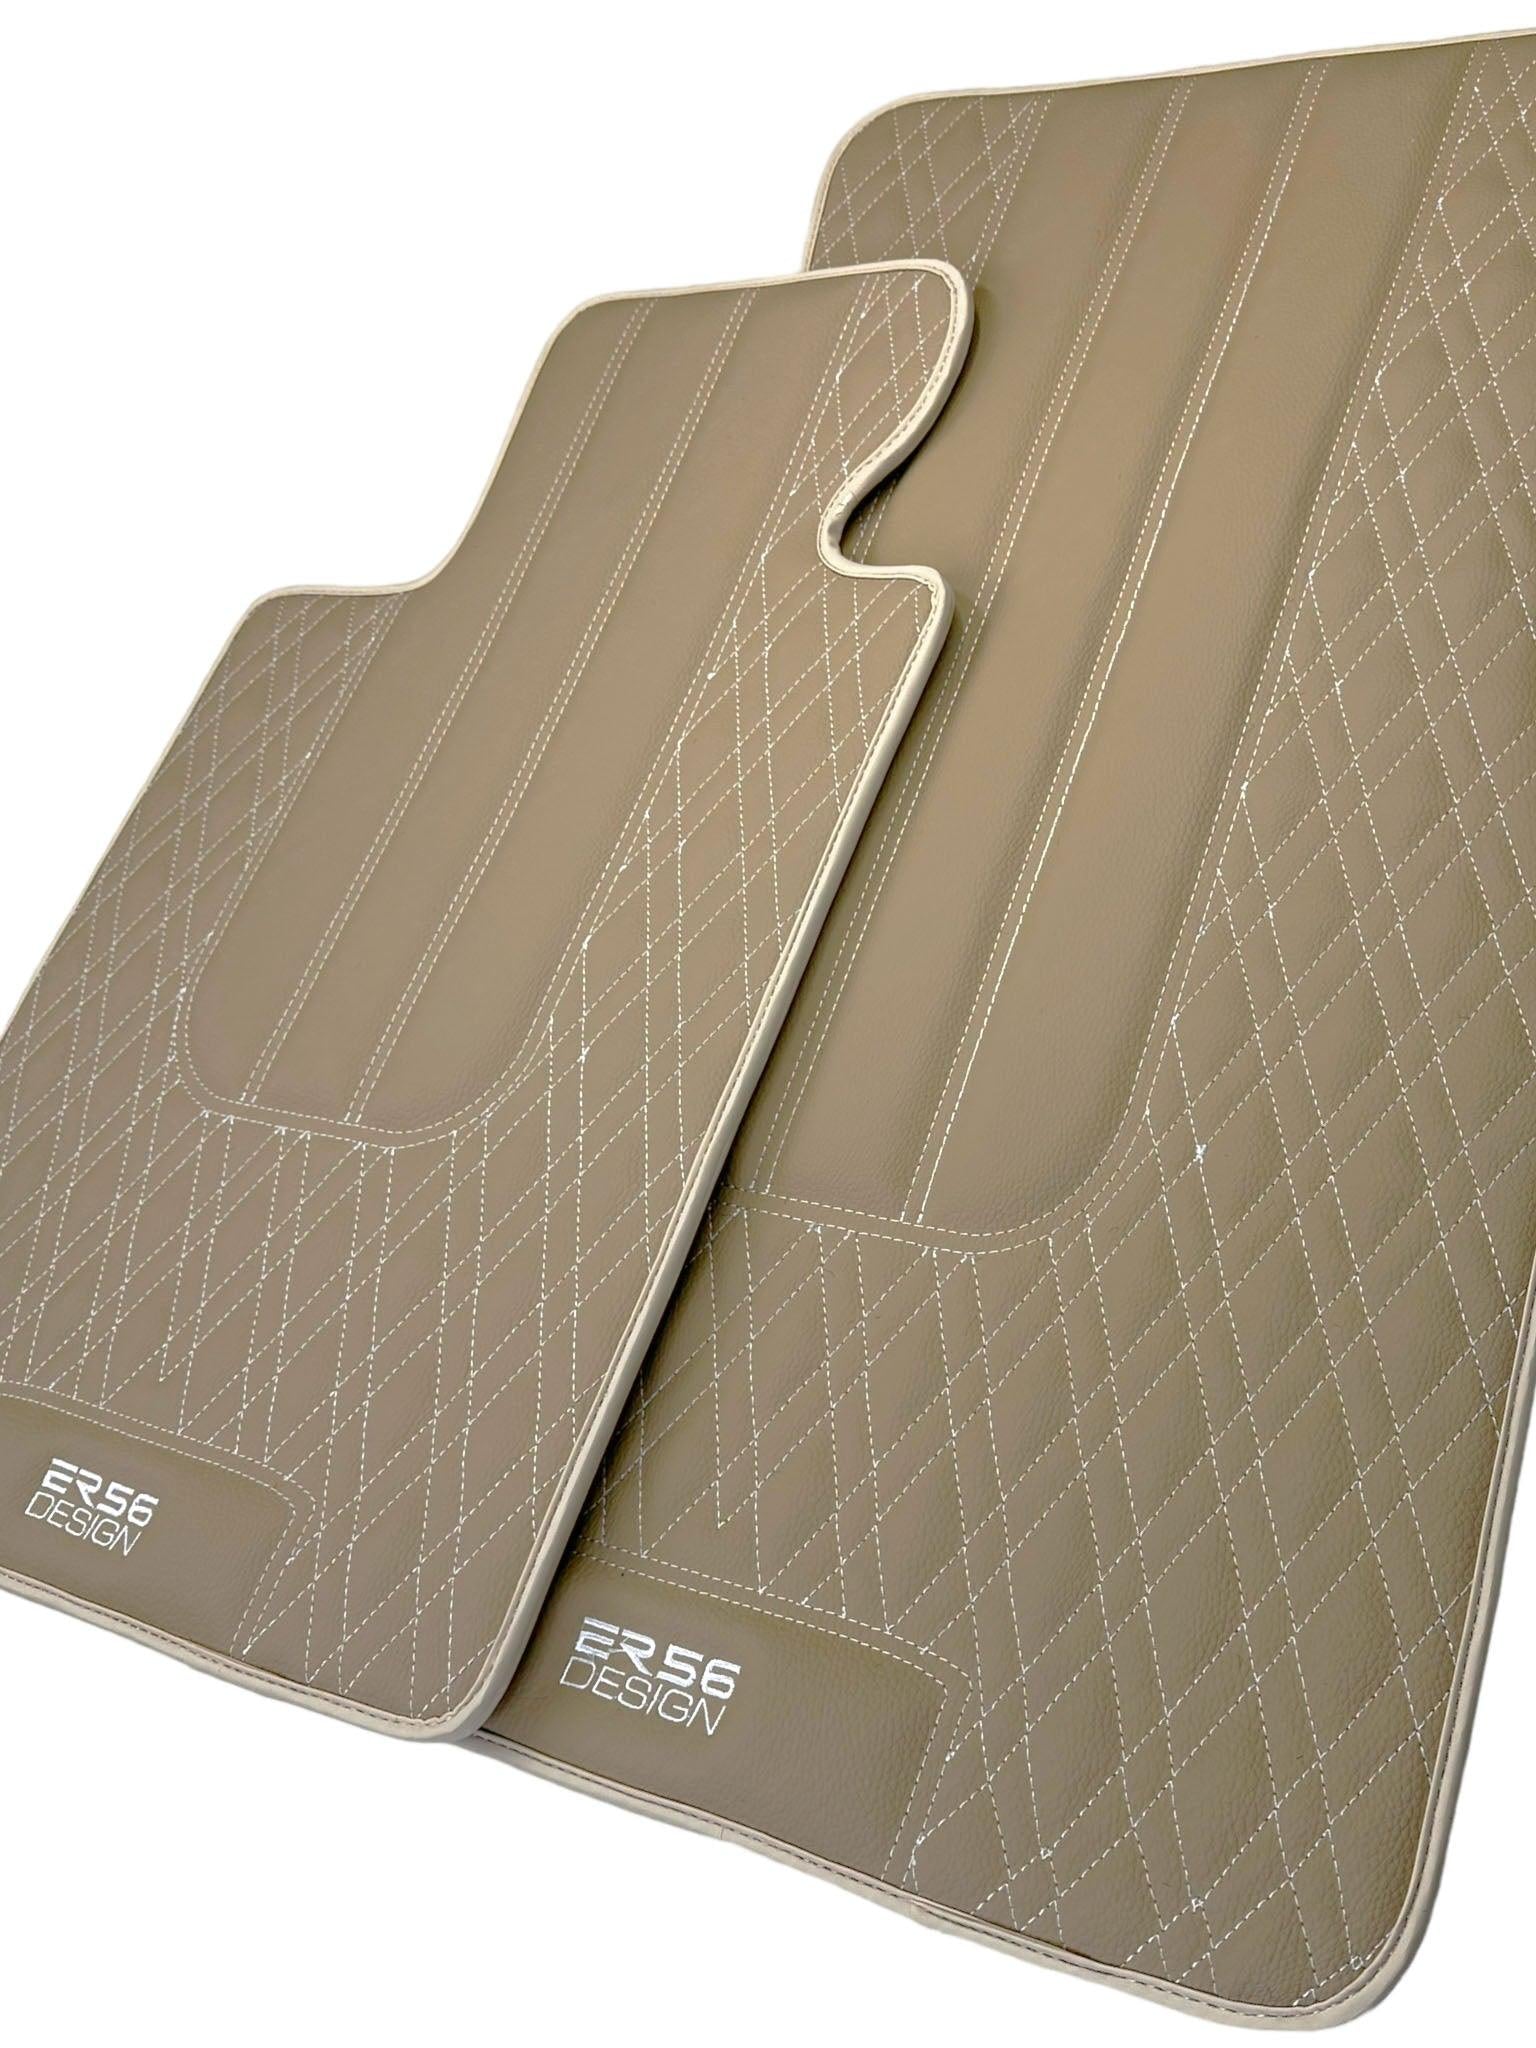 Beige Leather Floor Floor Mats For BMW M4 Series F83 | Fighter Jet Edition AutoWin Brand |Sky Blue Trim